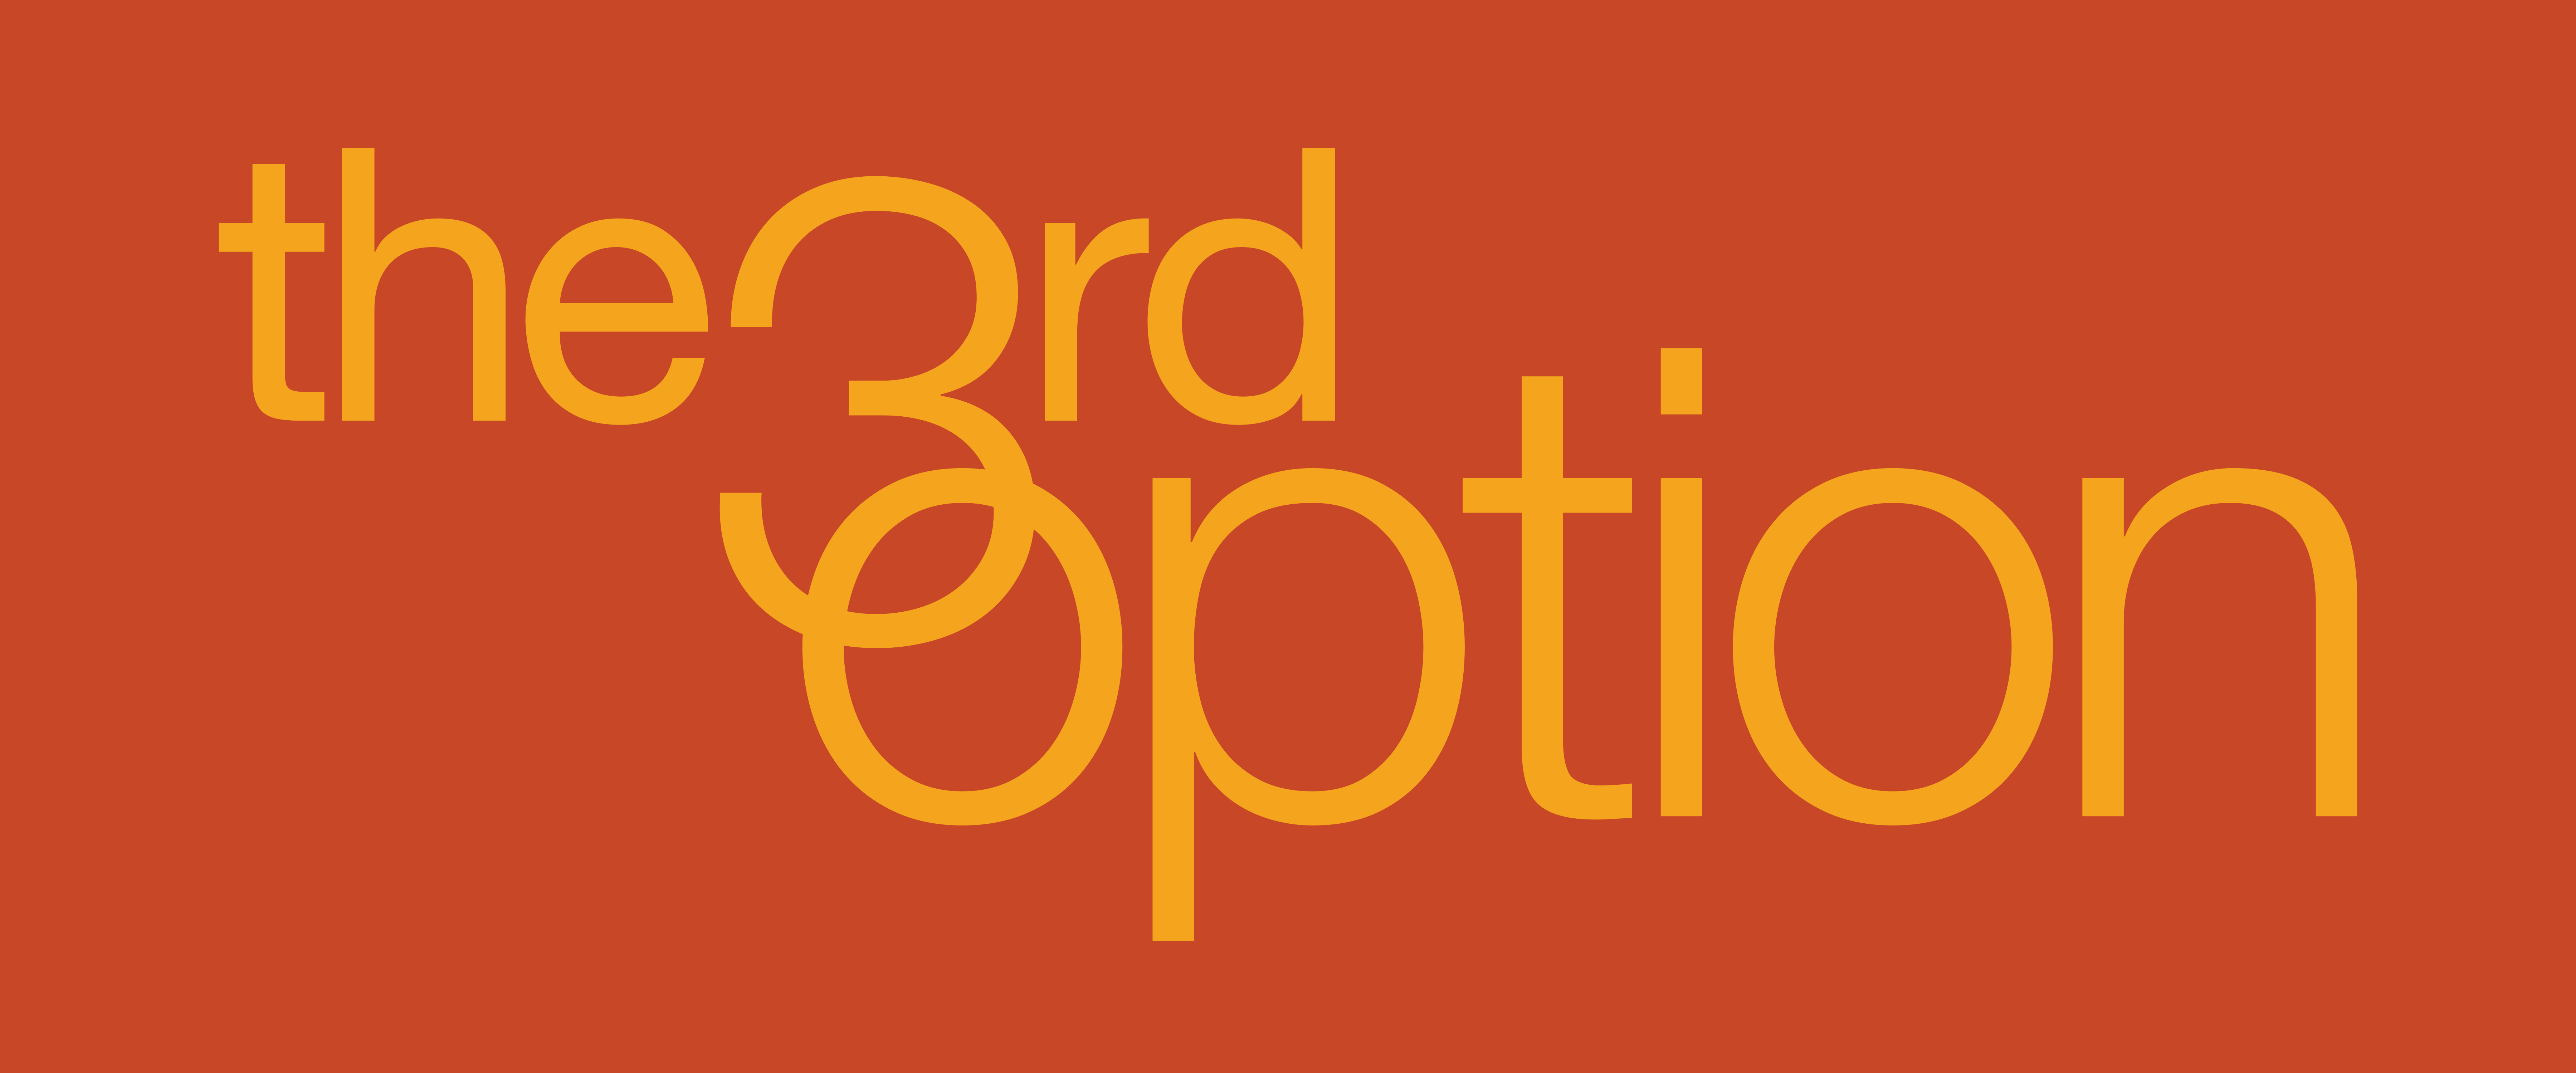 3rd-option-logo